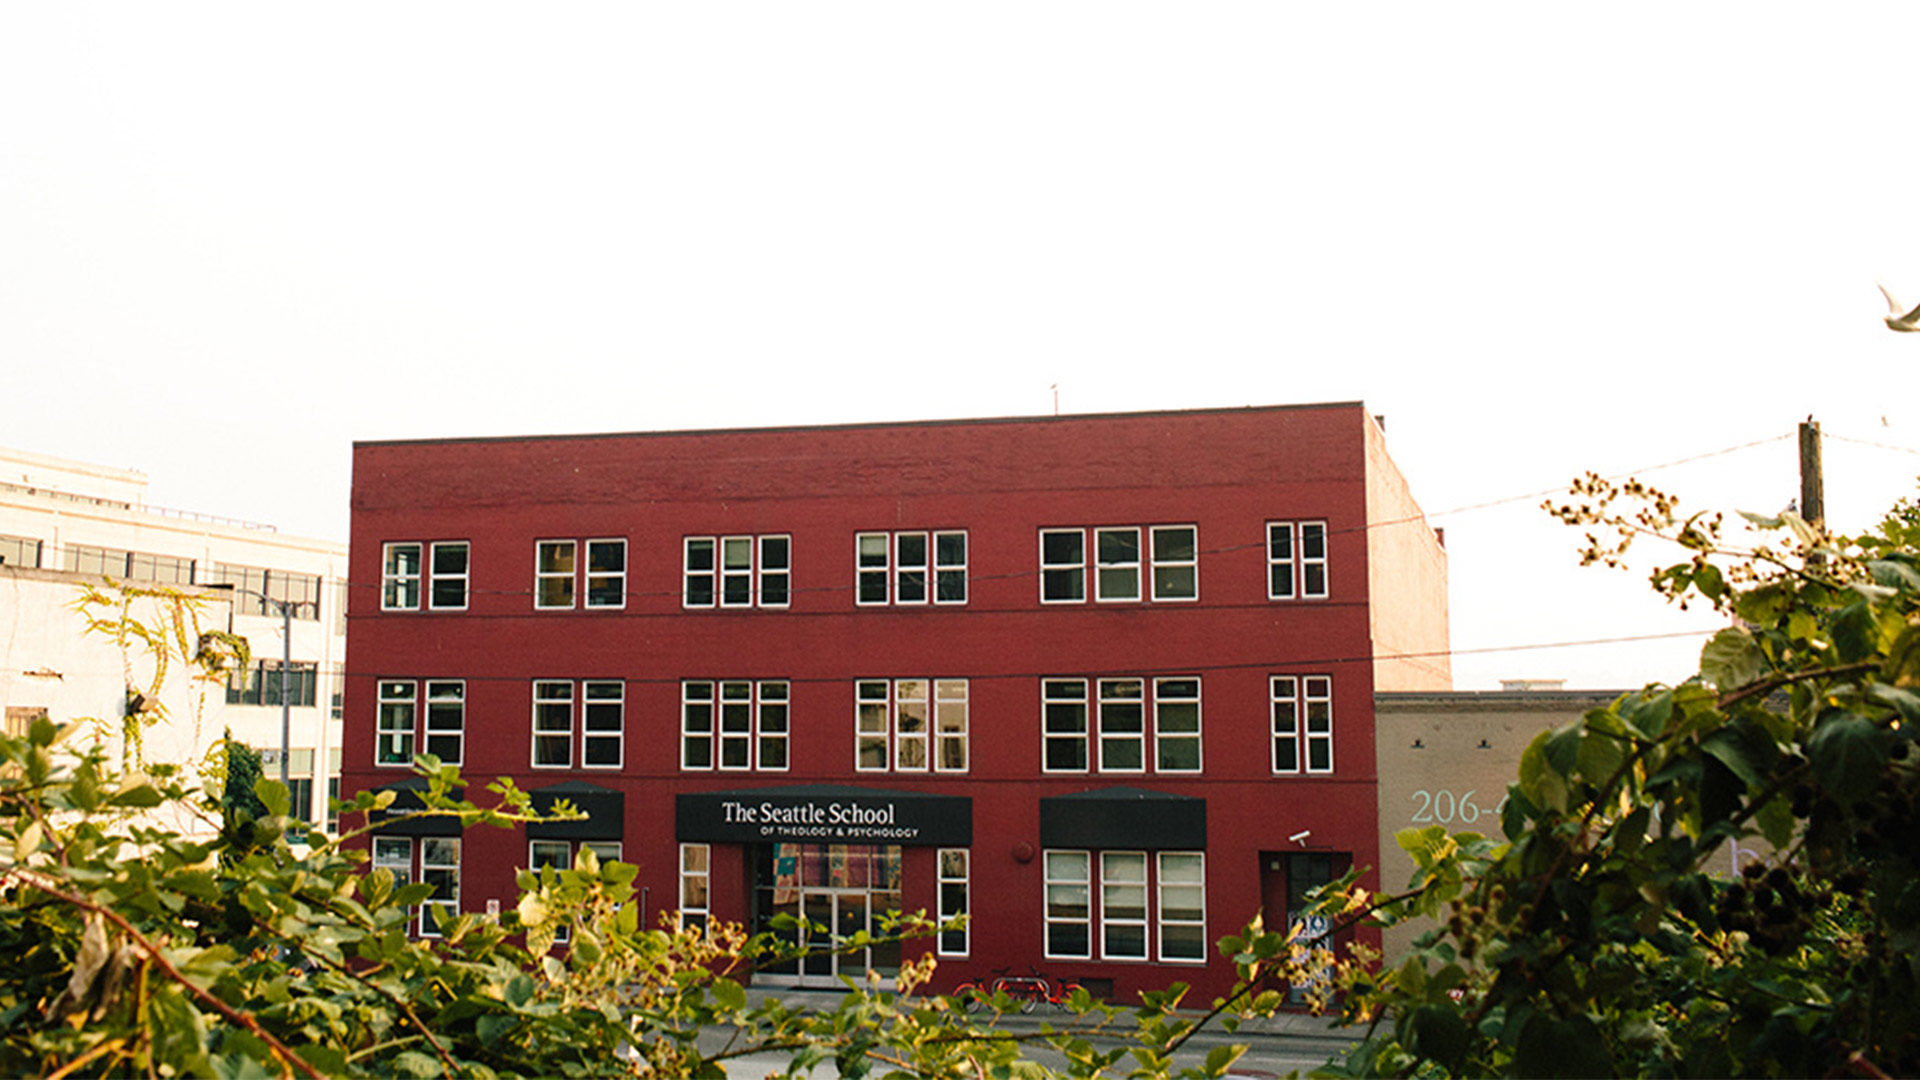 The Seattle School building